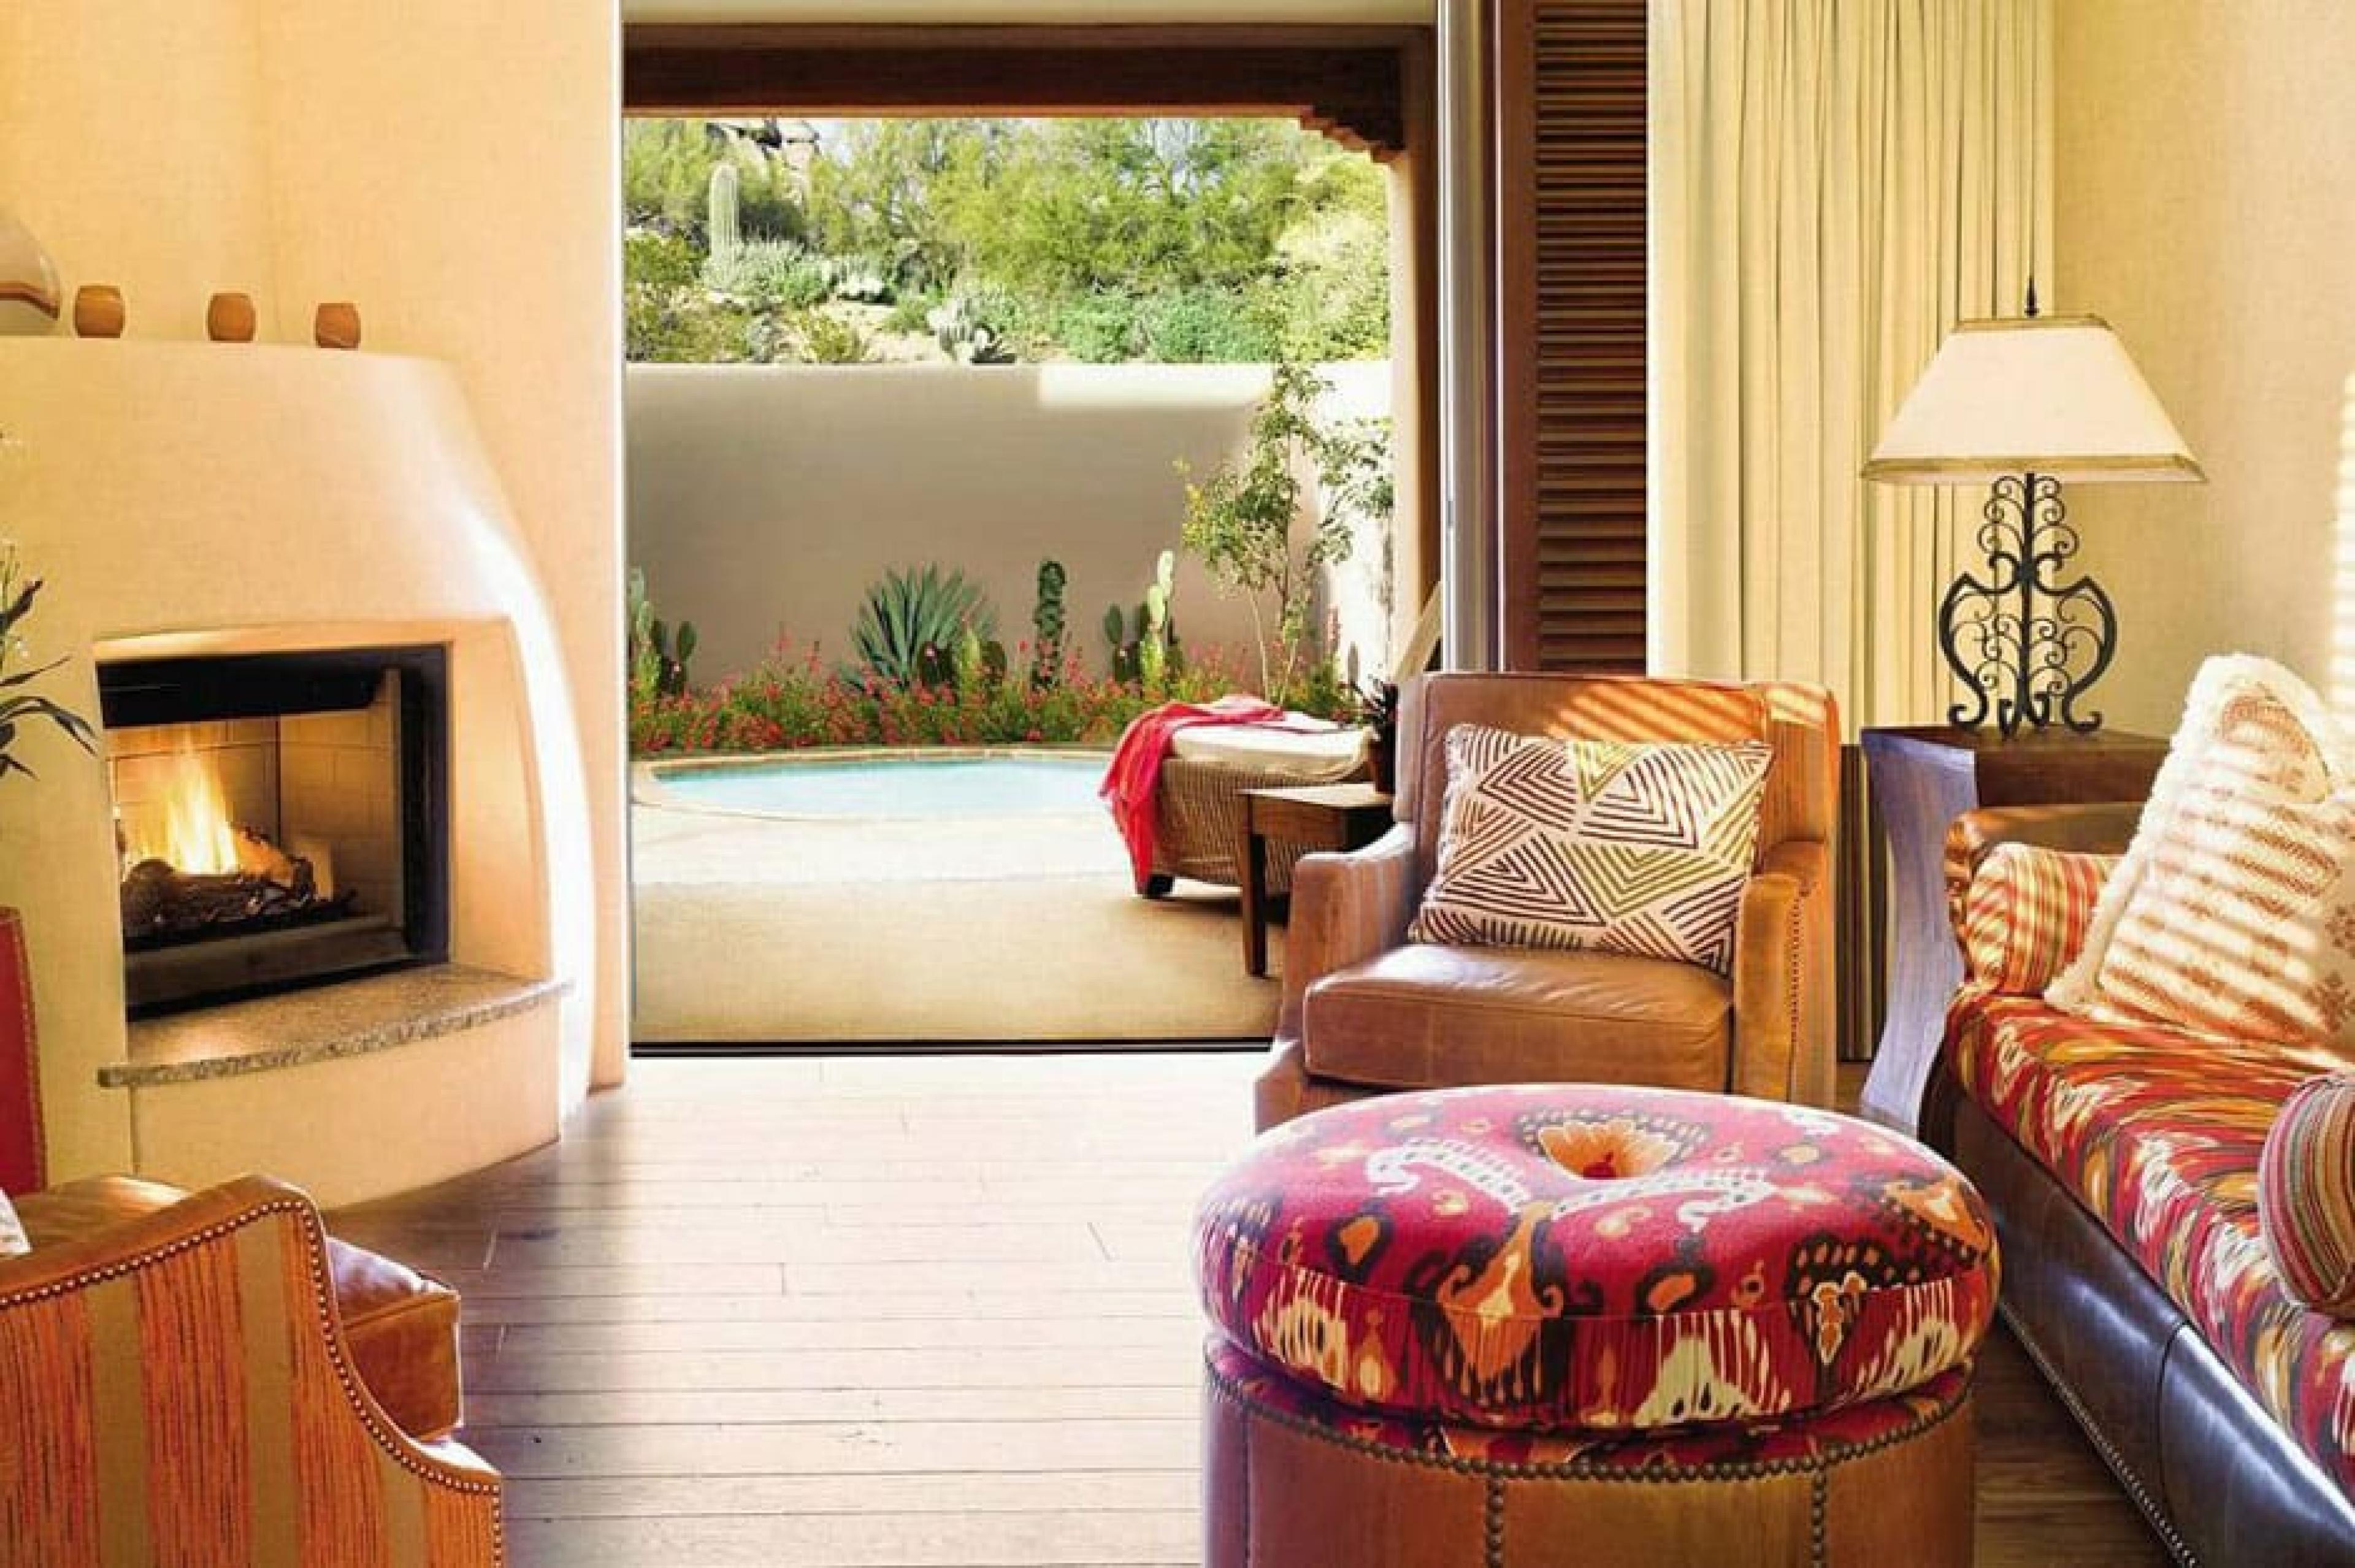 Living Room at Four Seasons Resort Scottsdale, Arizona, American West